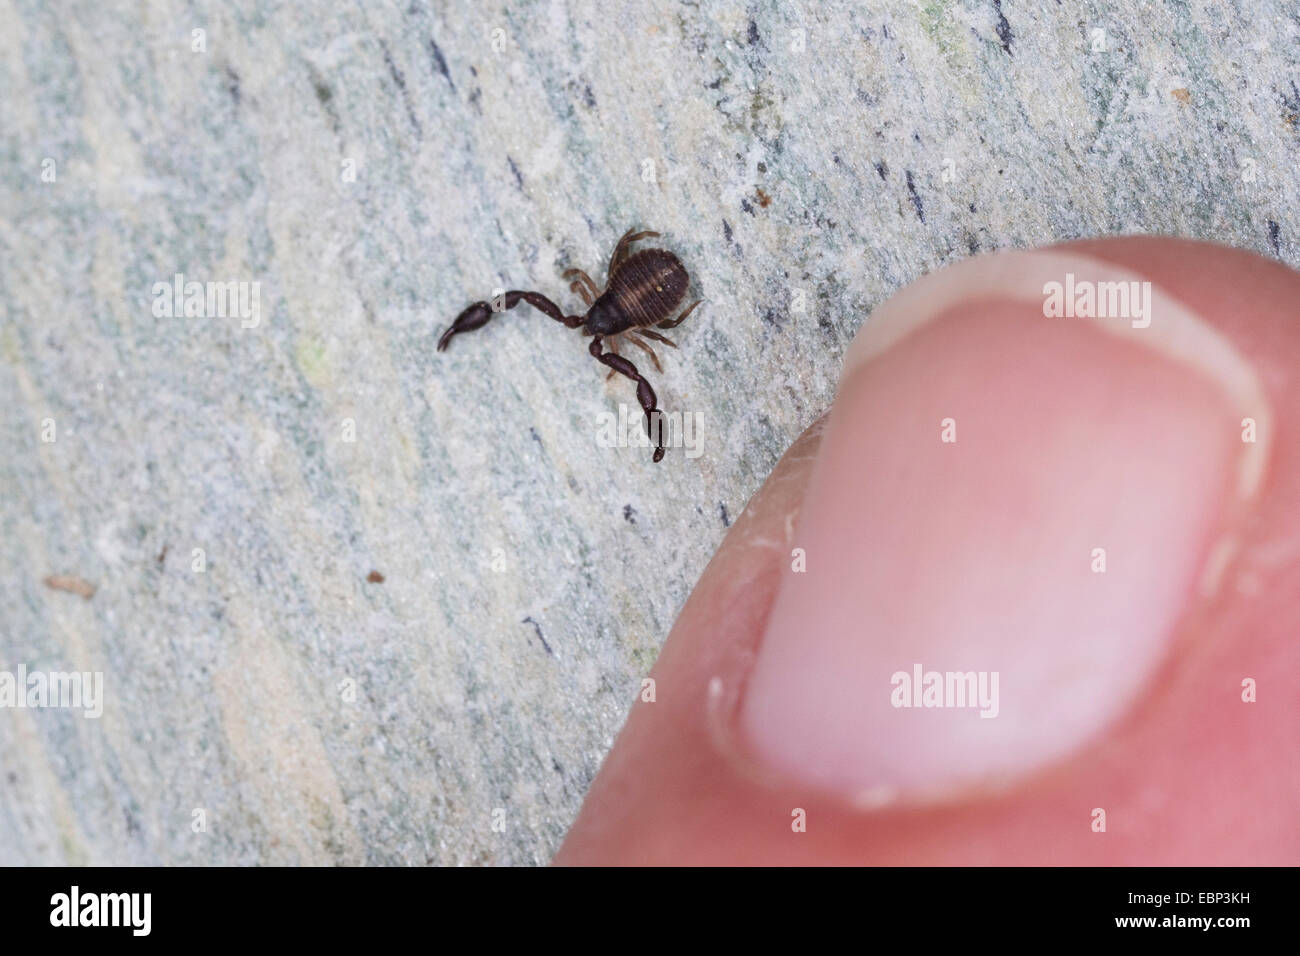 Pseudoscorpion, False scorpion, Book scorpion (Pseudoscorpiones), with a tip of a finger for size comparison, France, Corsica Stock Photo